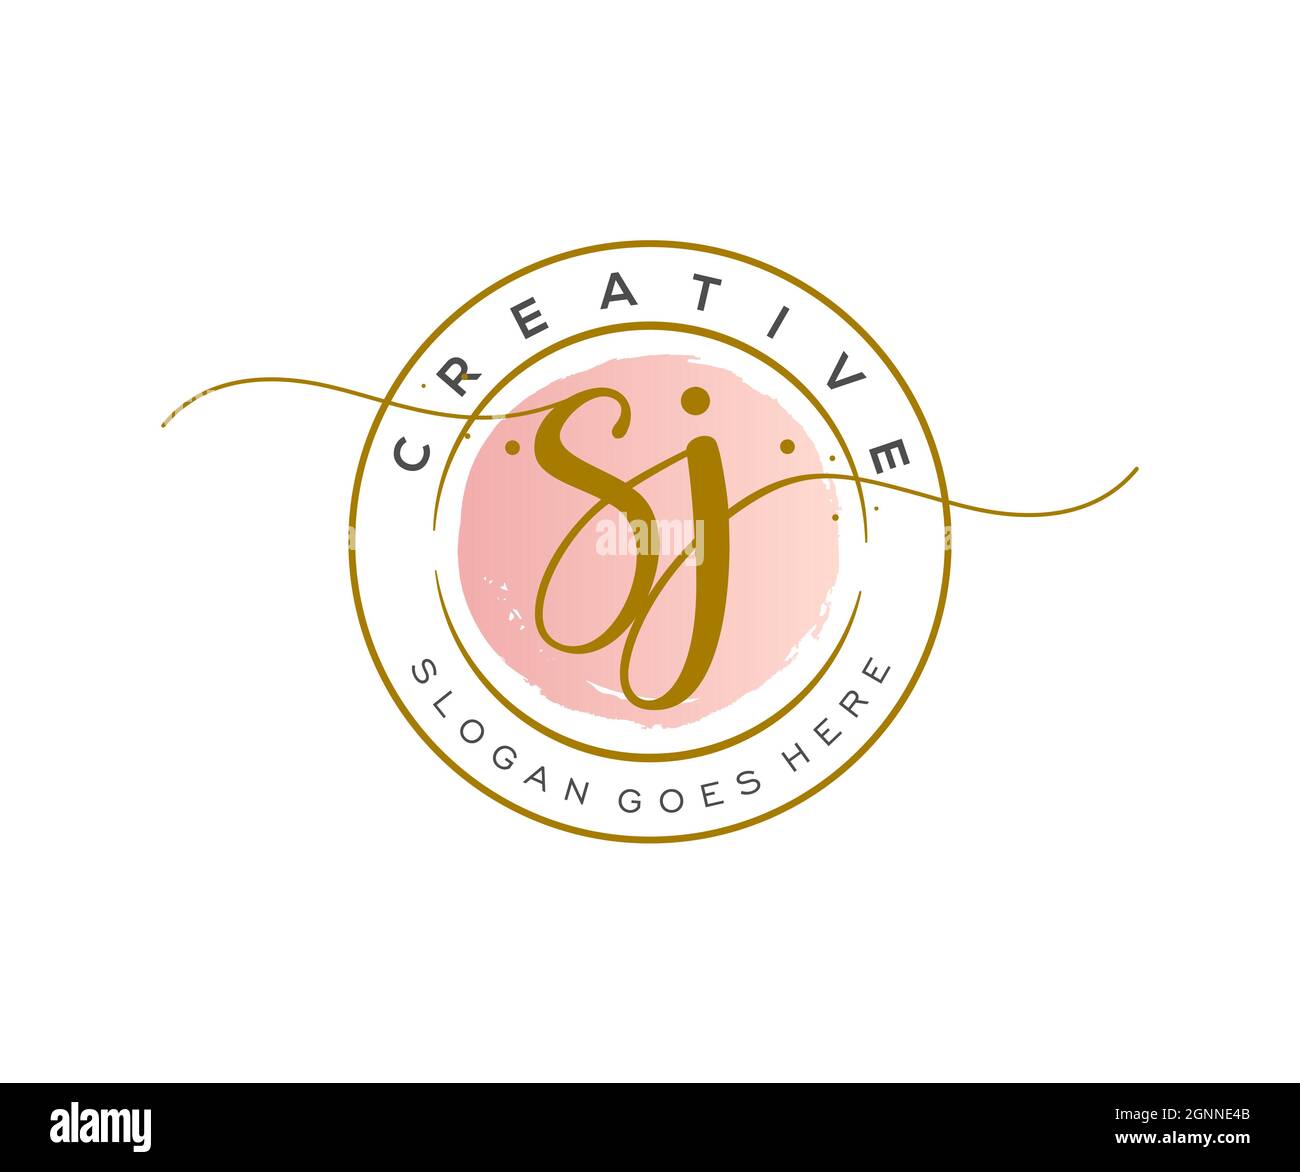 SJ Feminine logo beauty monogram and elegant logo design, handwriting logo of initial signature, wedding, fashion, floral and botanical with creative Stock Vector